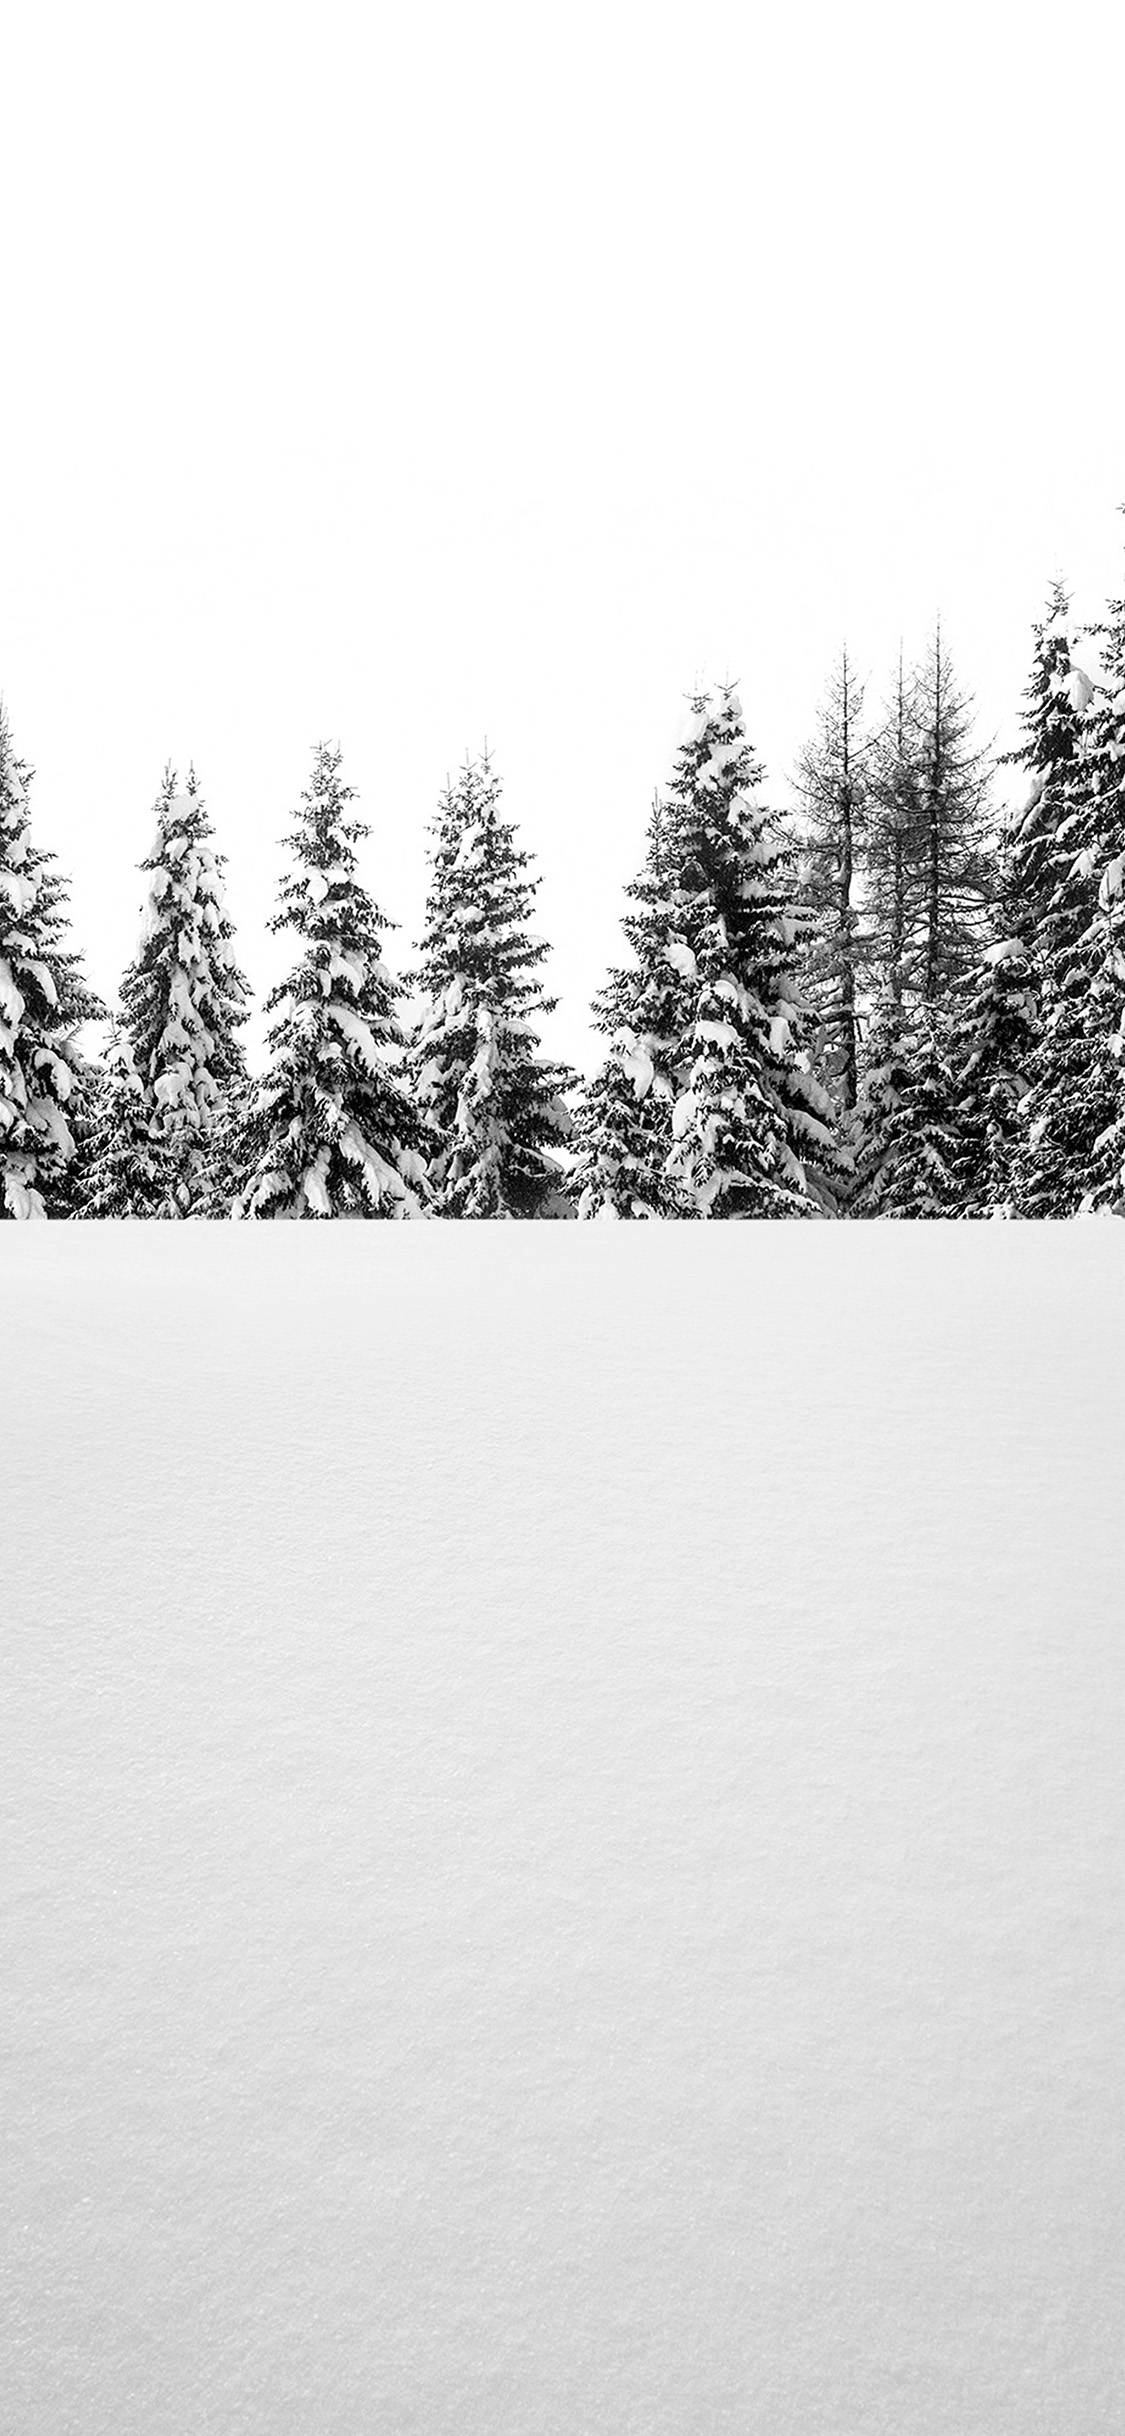 iPhone X wallpaper. snow tree winter white nature